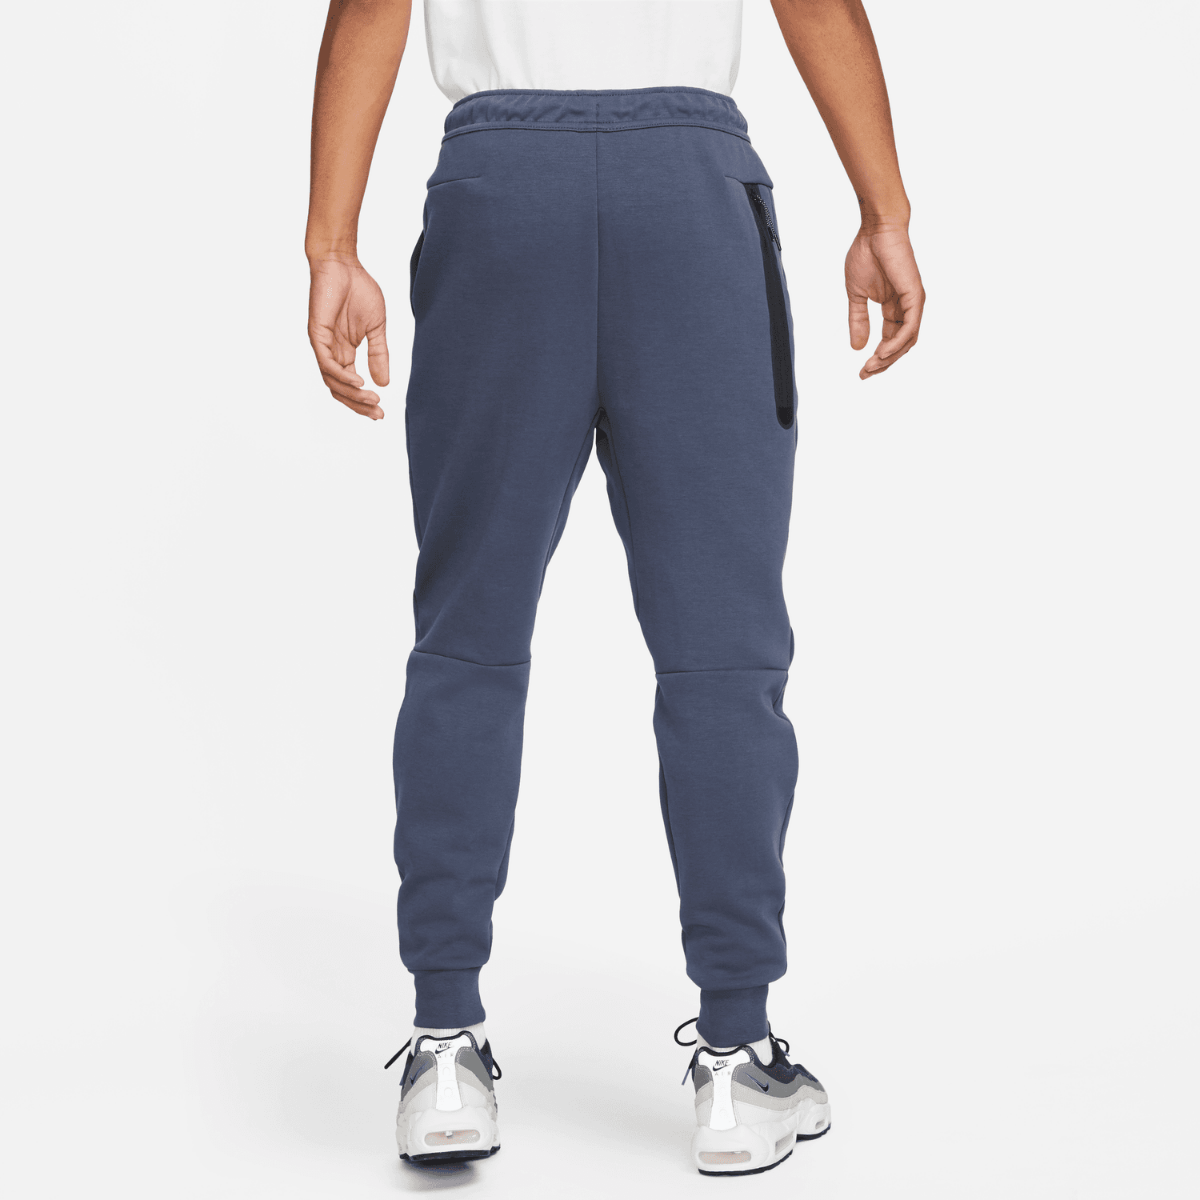 Pantalon Jogging Nike Sportswear Tech Fleece - Blau/Noir